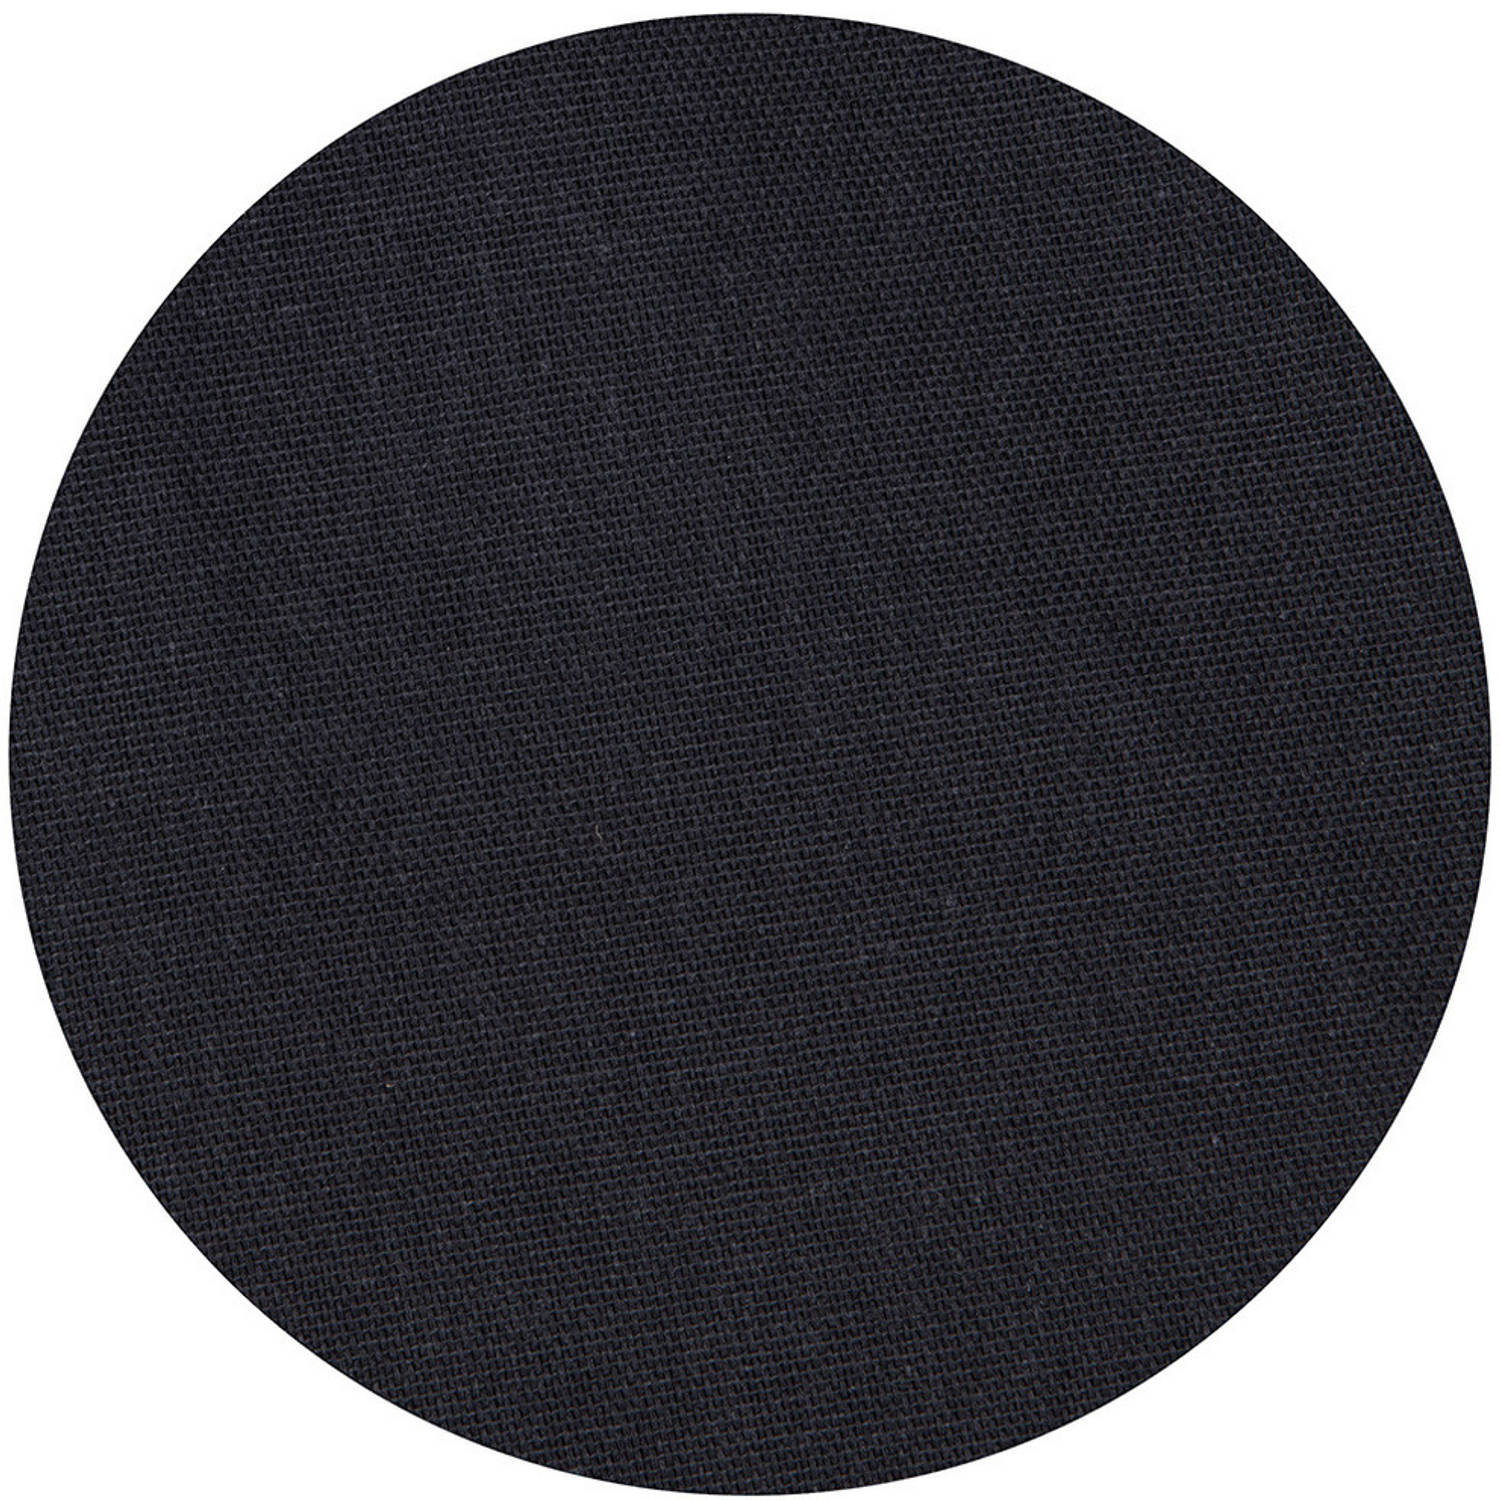 Zwart tafelkleed van polyester/katoen rond 160 cm - Feesttafelkleden